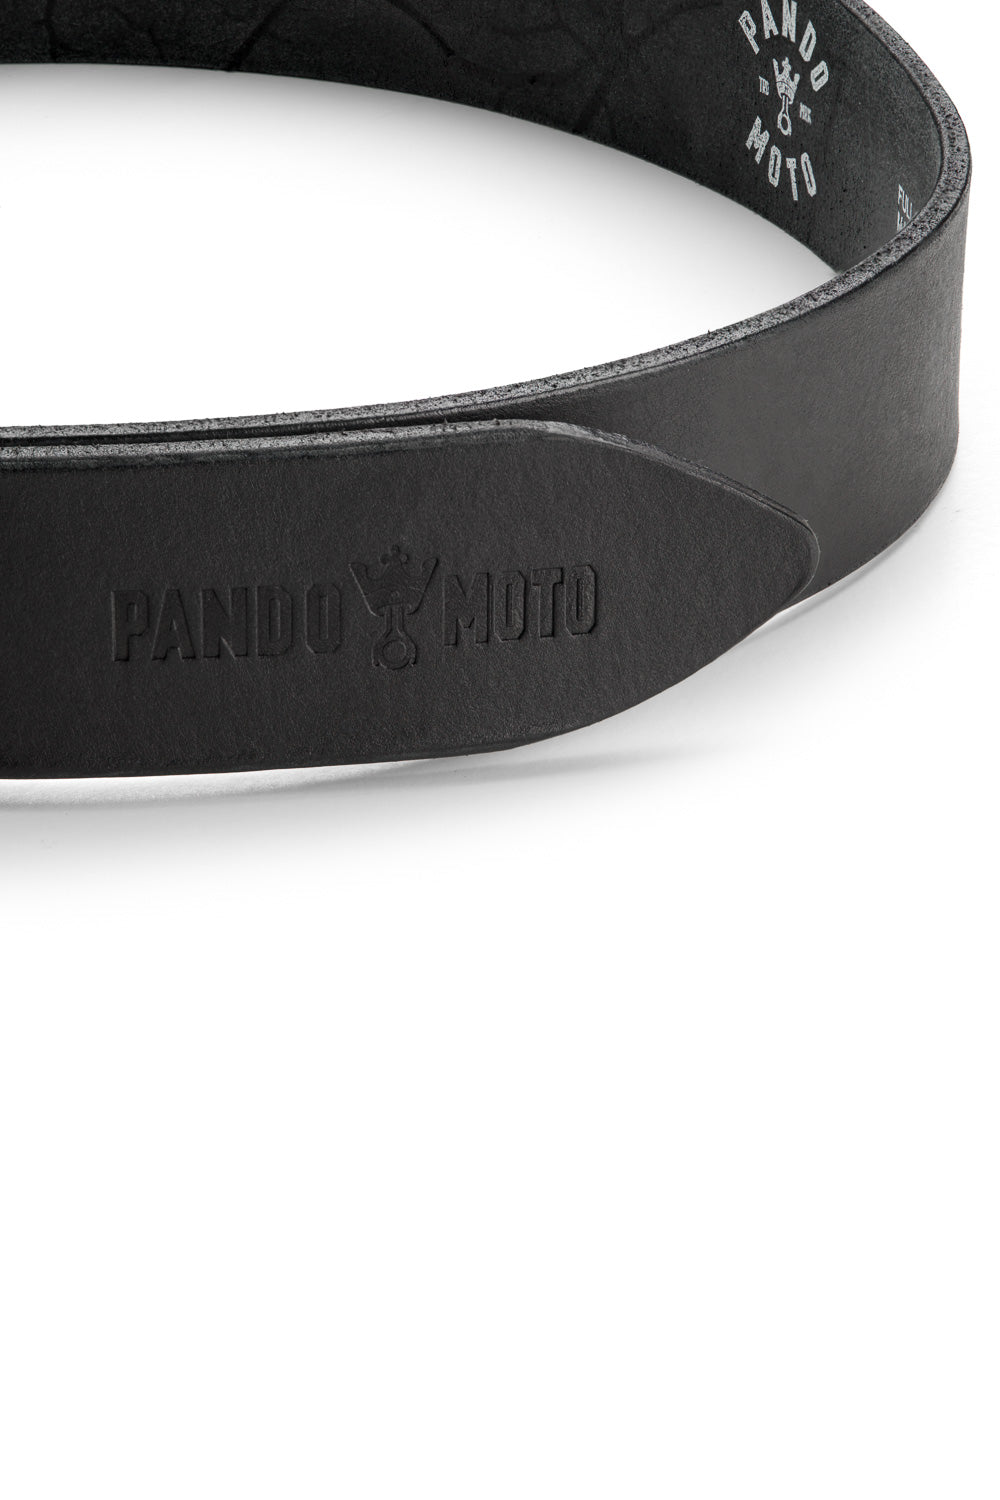 Pando Moto HIMO 2 Belt